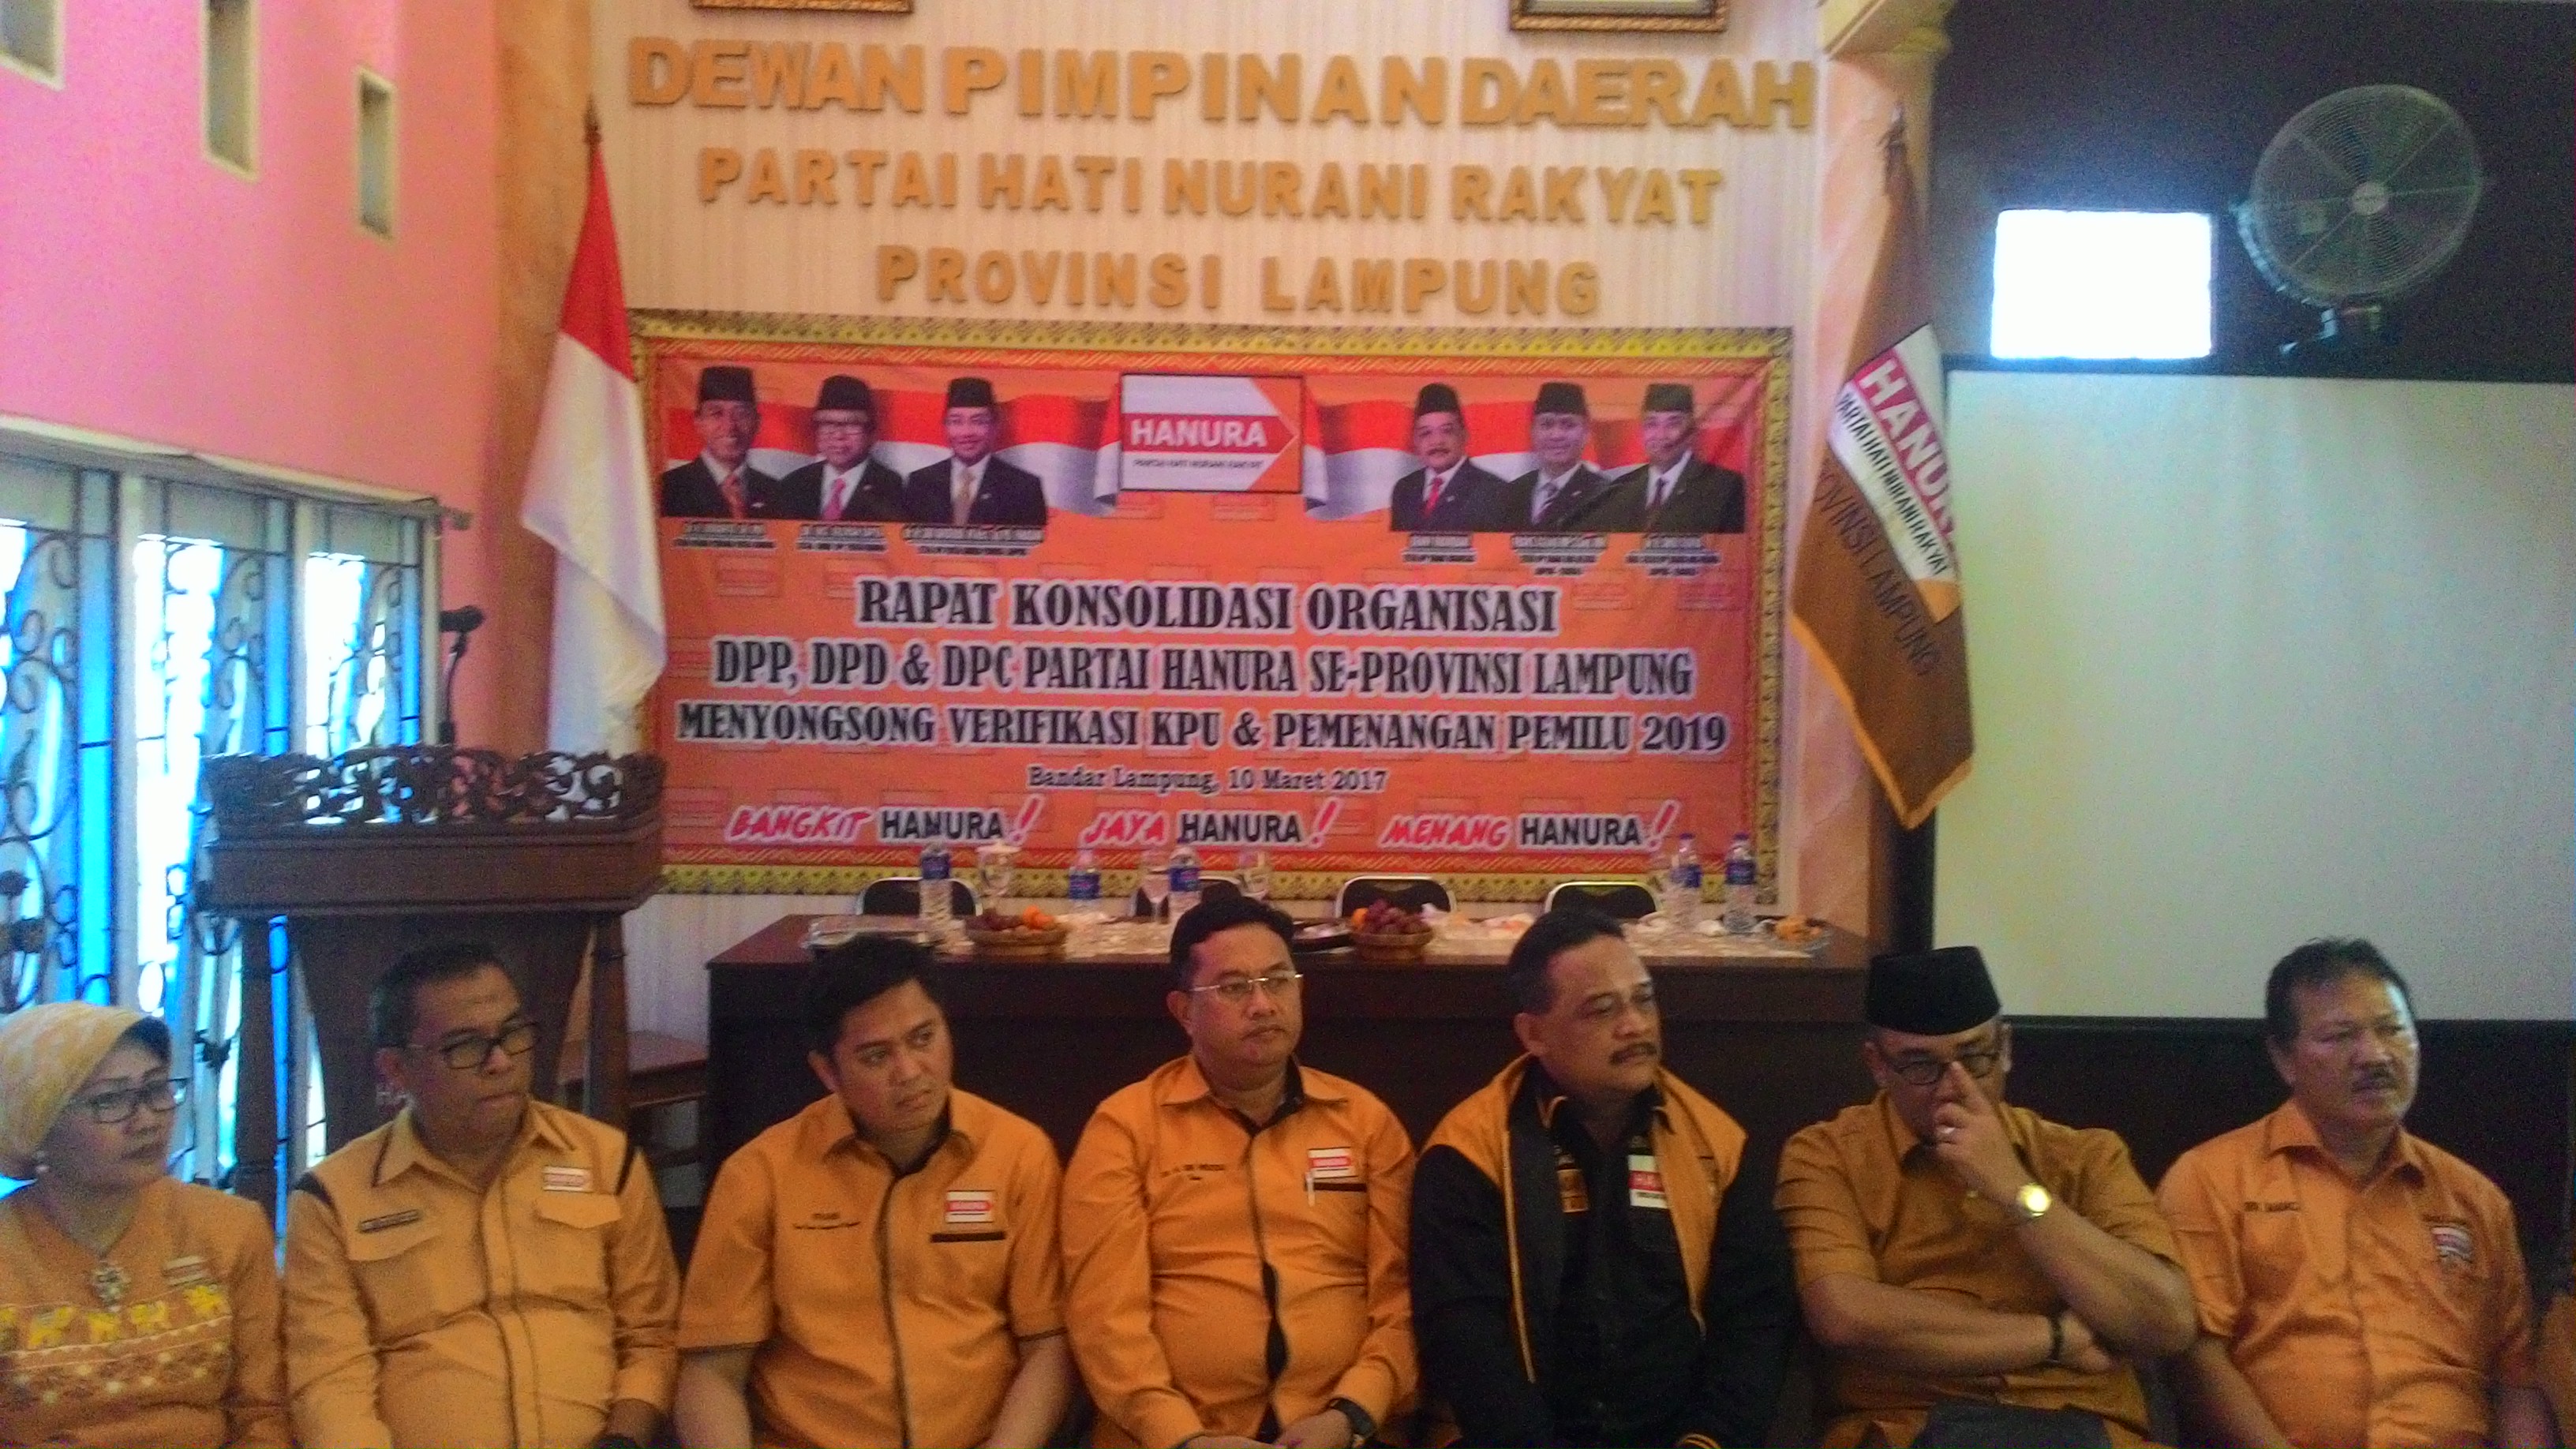 Rapat konsolidasi Partai Hanura. (Lampungnews/Davit)